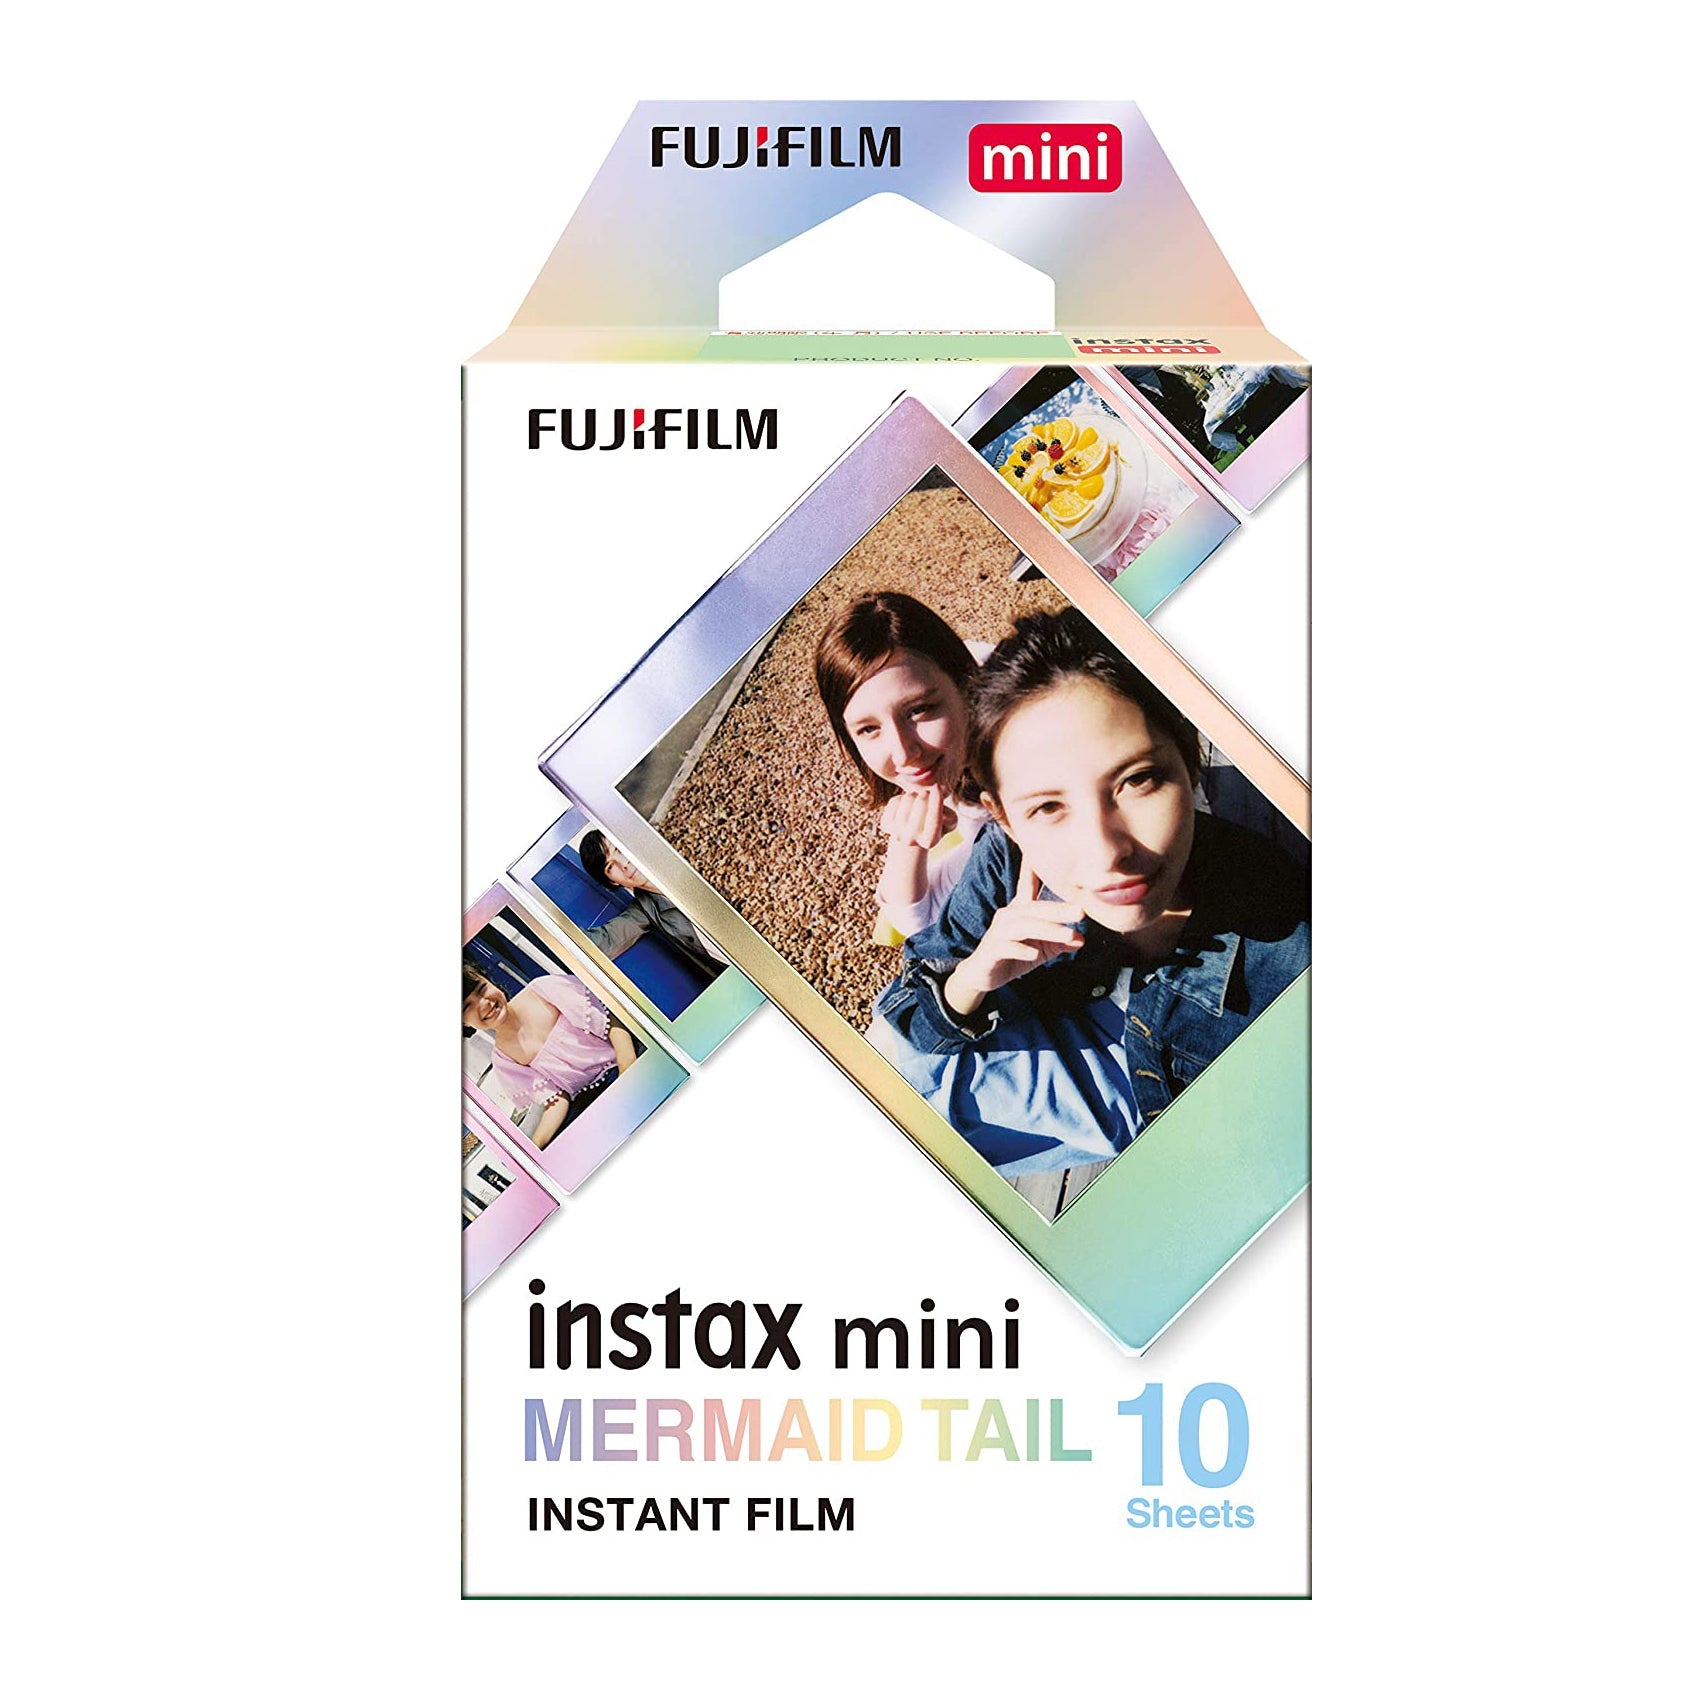 Fujifilm Instax Mini 10X1 mermaid tail Instant Film with Instax Time Photo Album 64 Sheets (blush pink)